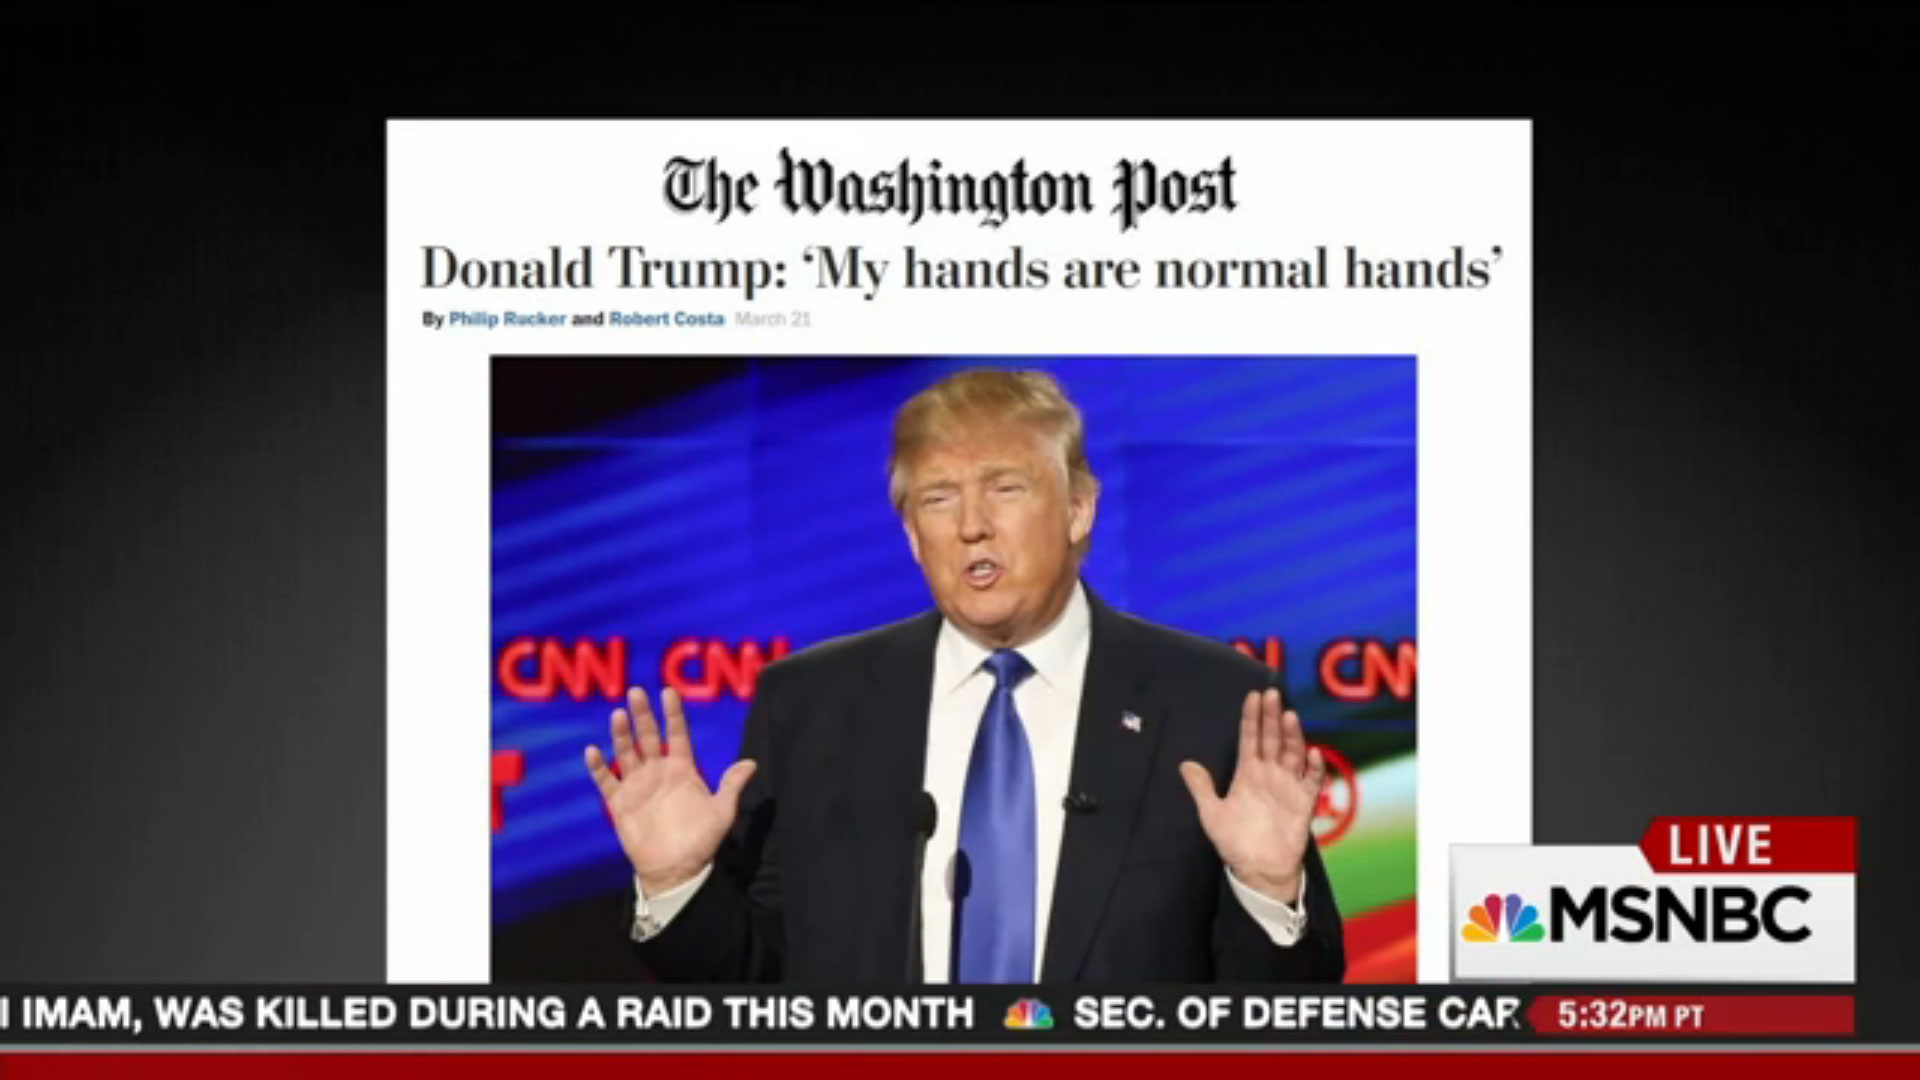 ‘My hands are normal hands’ said @realDonaldTrump